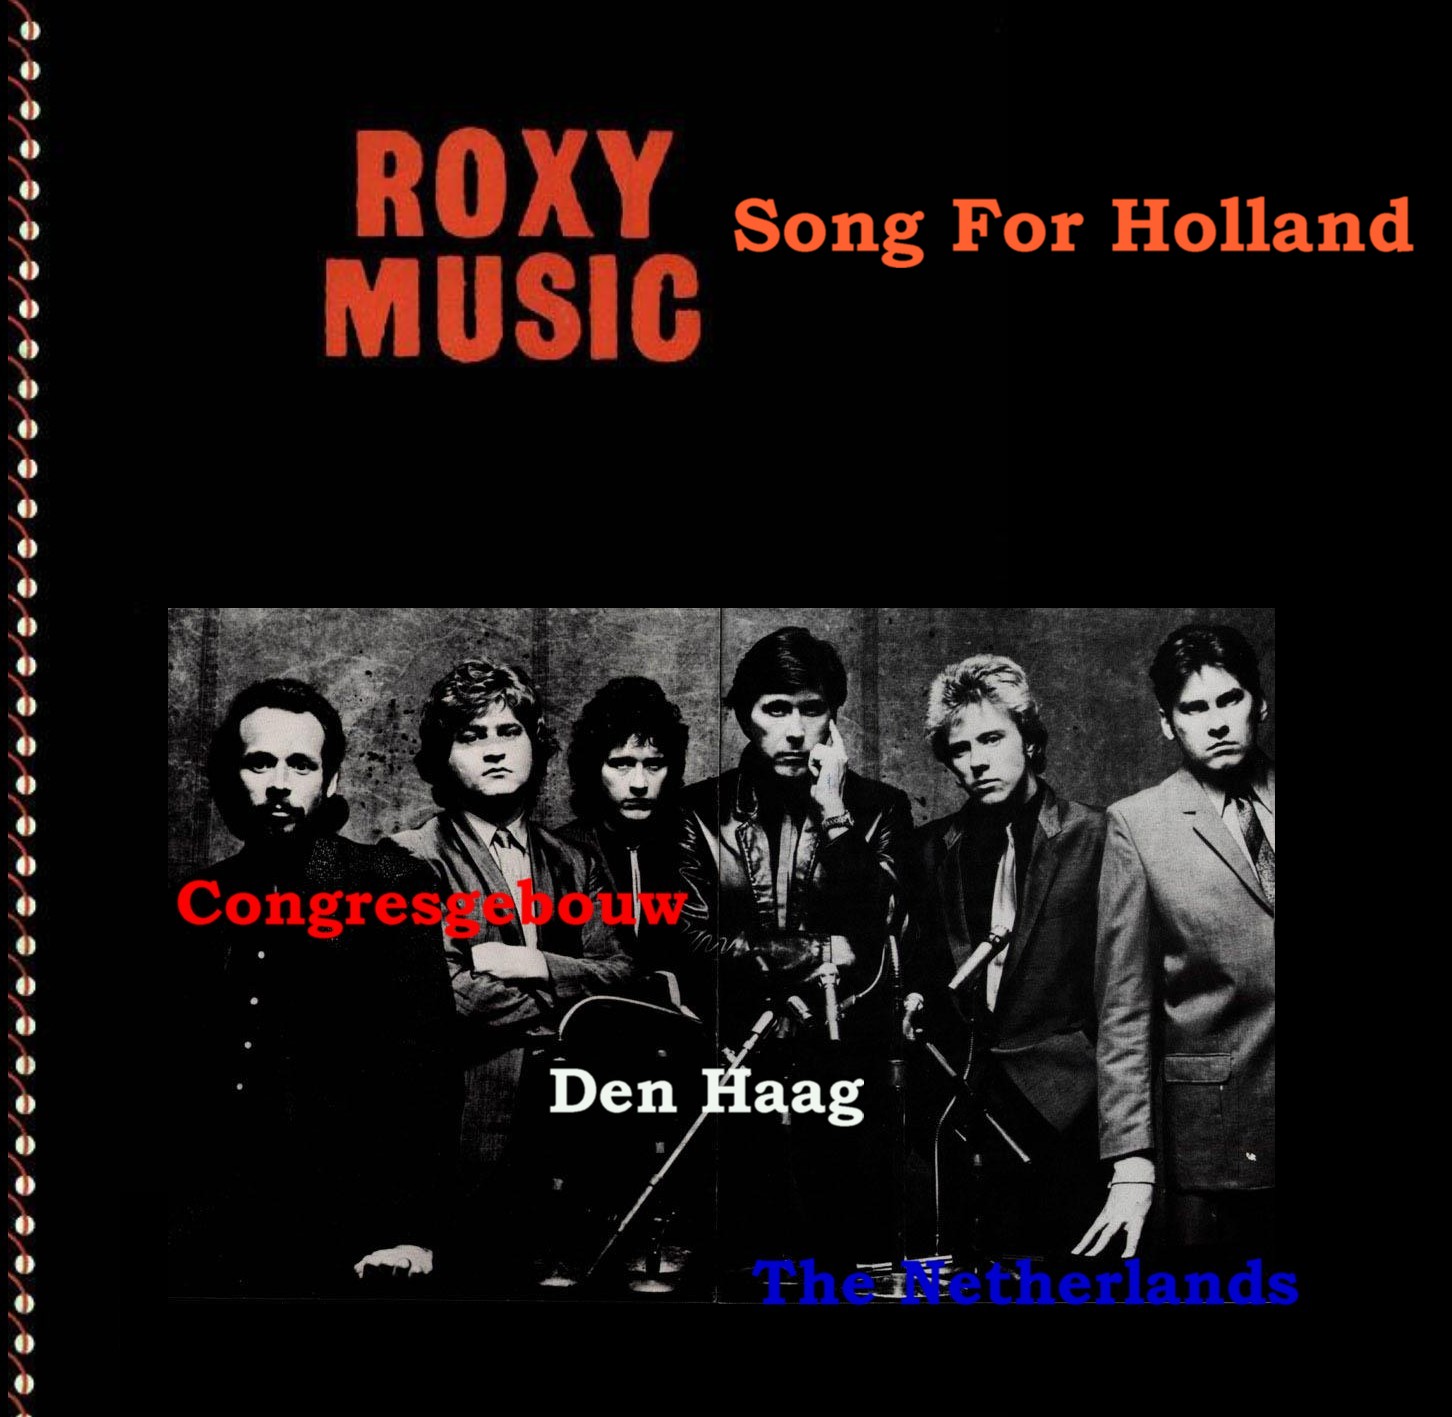 RoxyMusic1979-03-06CongresgebouwDenHaagHolland.JPG